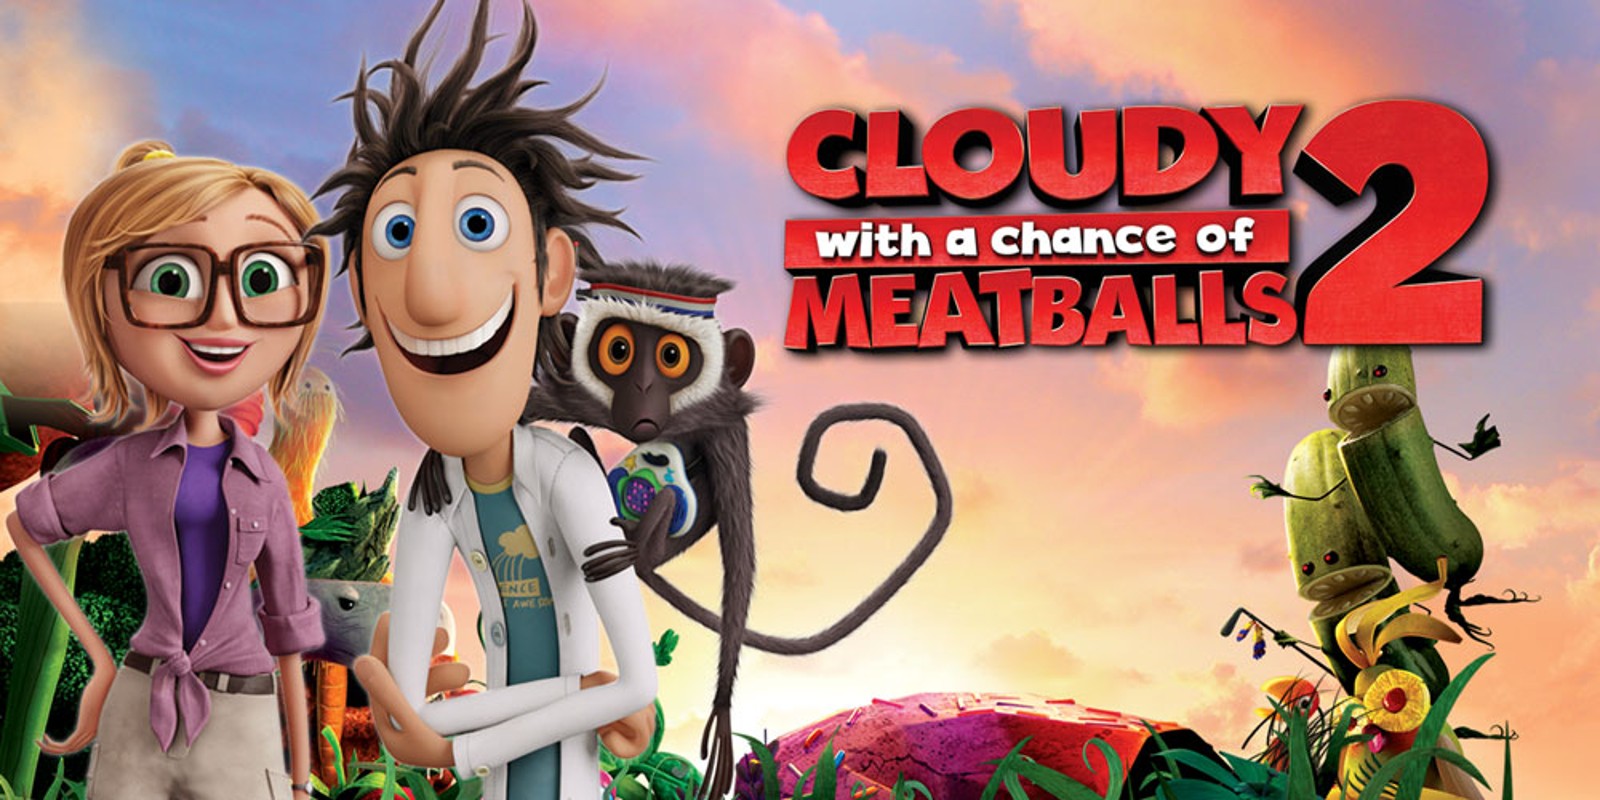 Возможны осадки в виде. Cloudy with a chance of Meatballs 2 (2013). Cloudy with a chance of Meatballs. Cloudy with a chance of Meatballs 2 игра. Cloudy a chance of Meatballs игра.